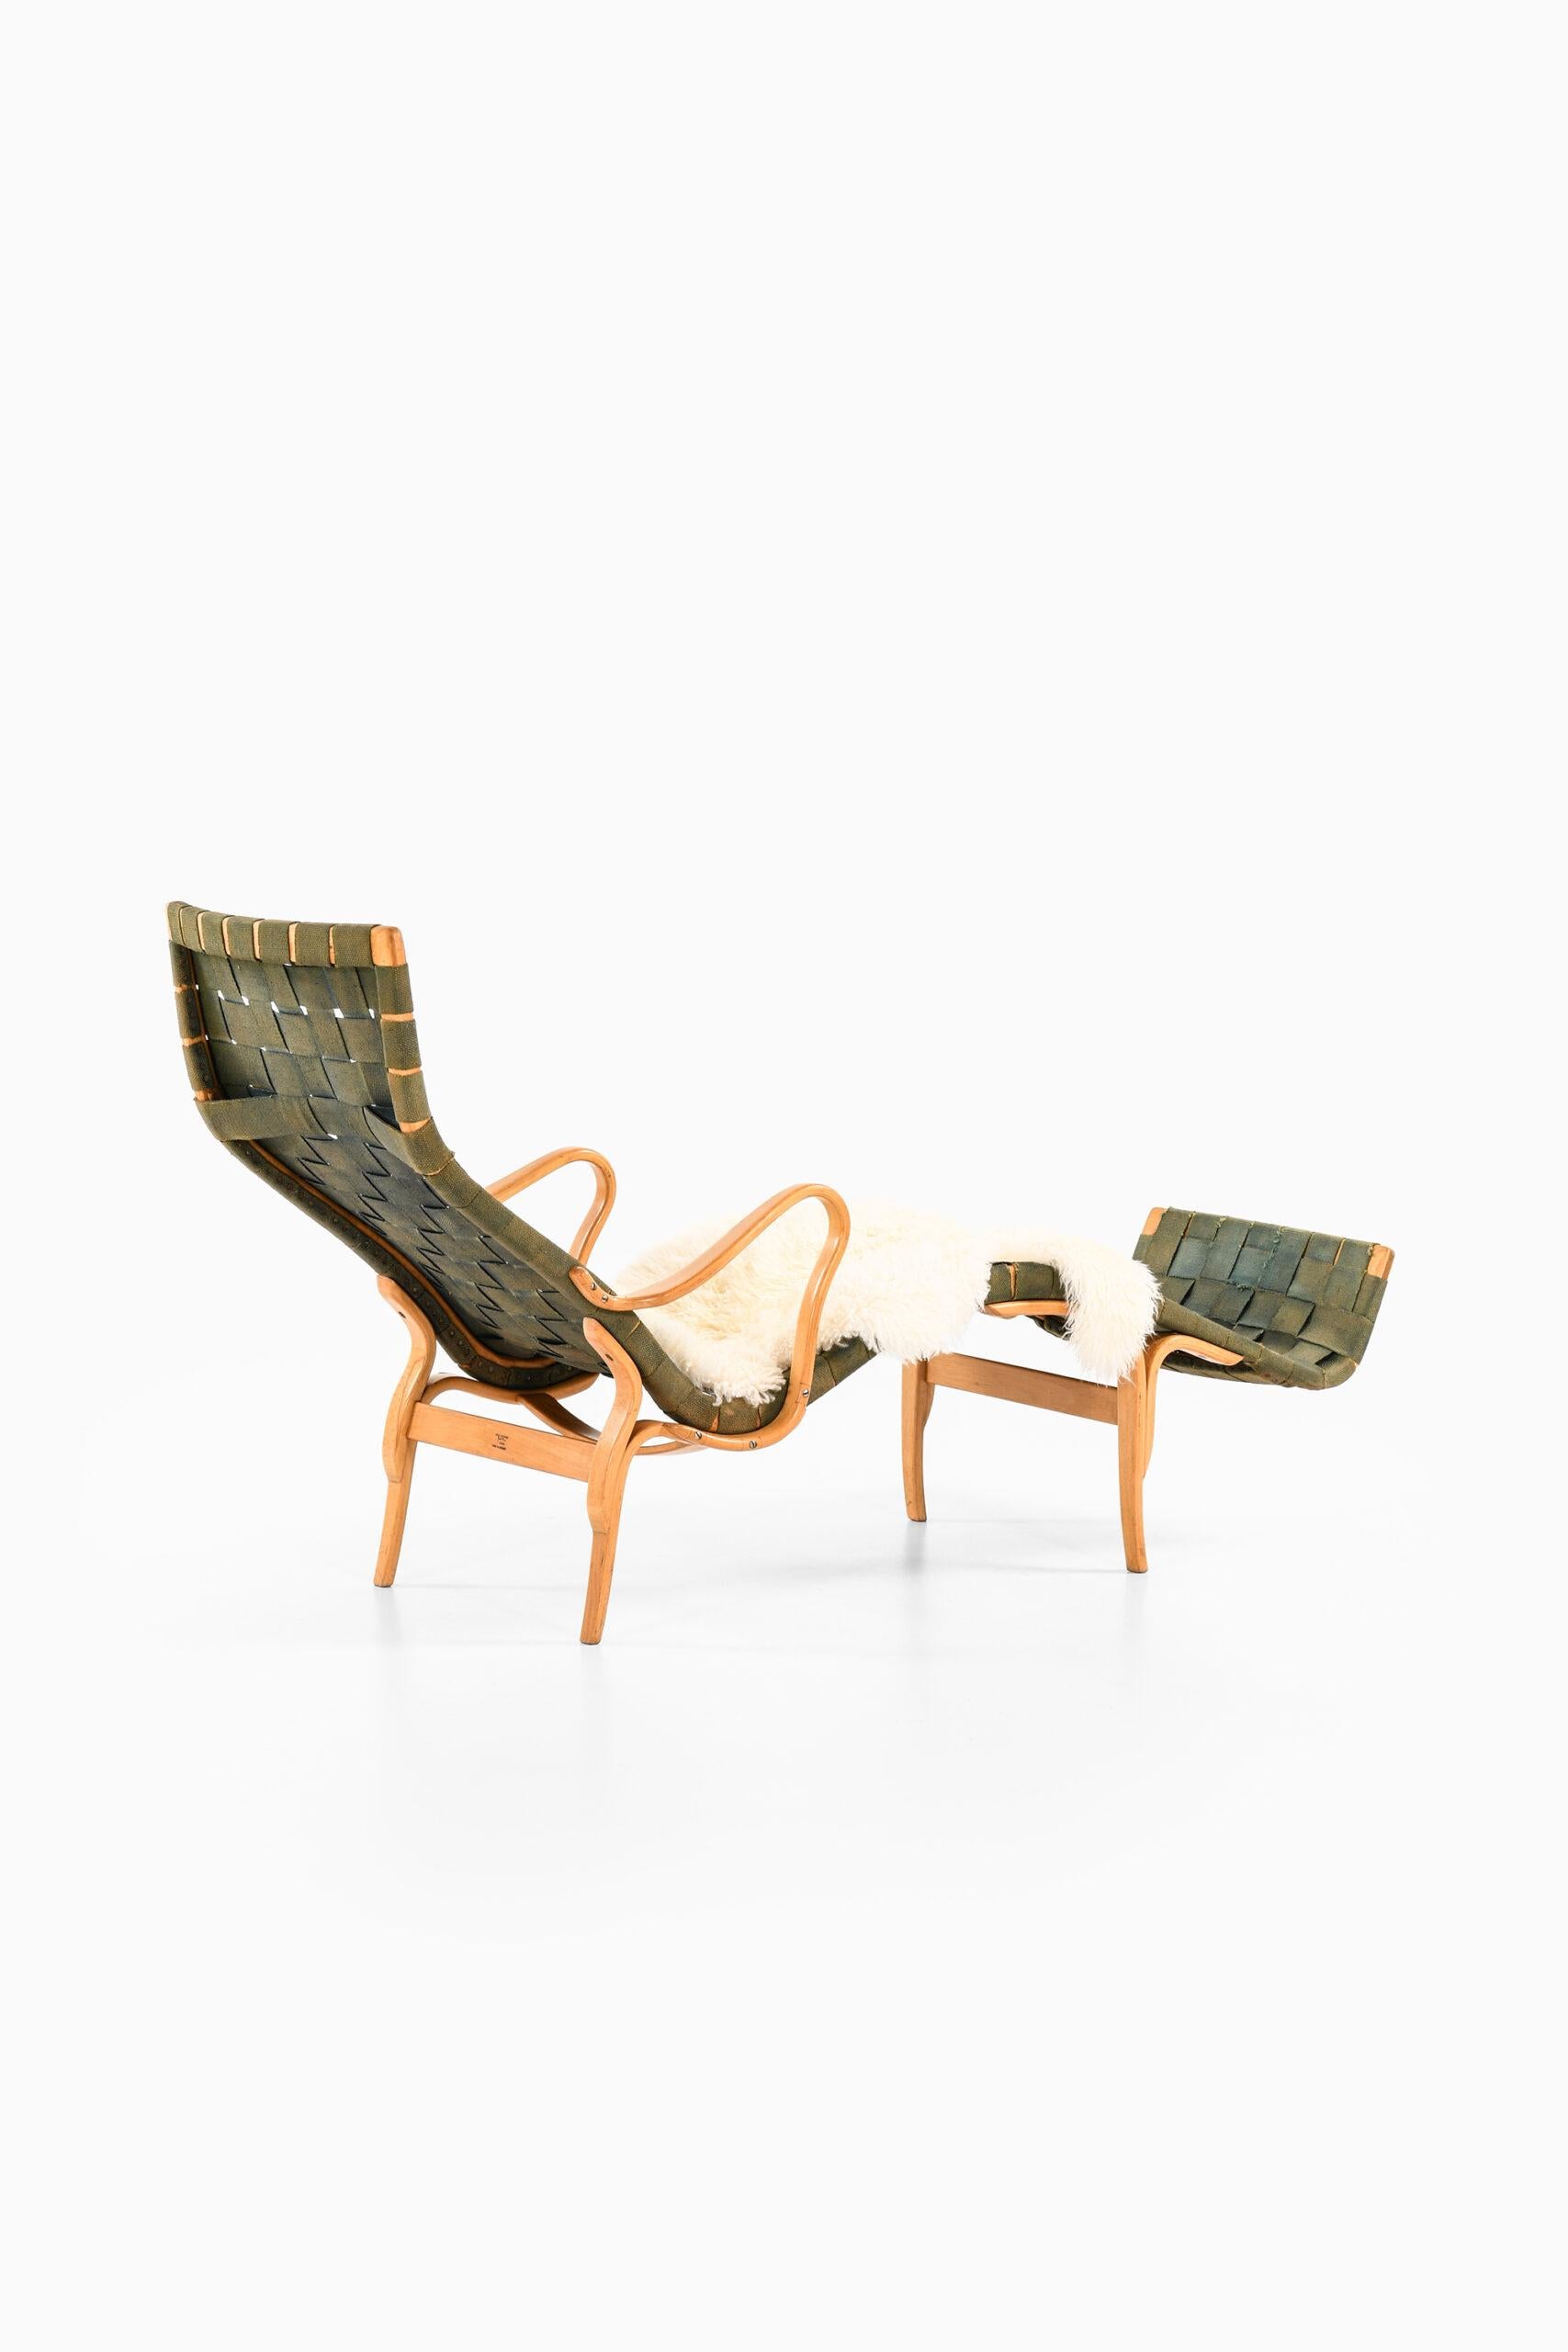 Scandinavian Modern Bruno Mathsson Lounge Chair Model Pernilla 3 / T-108 by Karl Mathsson in Värnamo For Sale